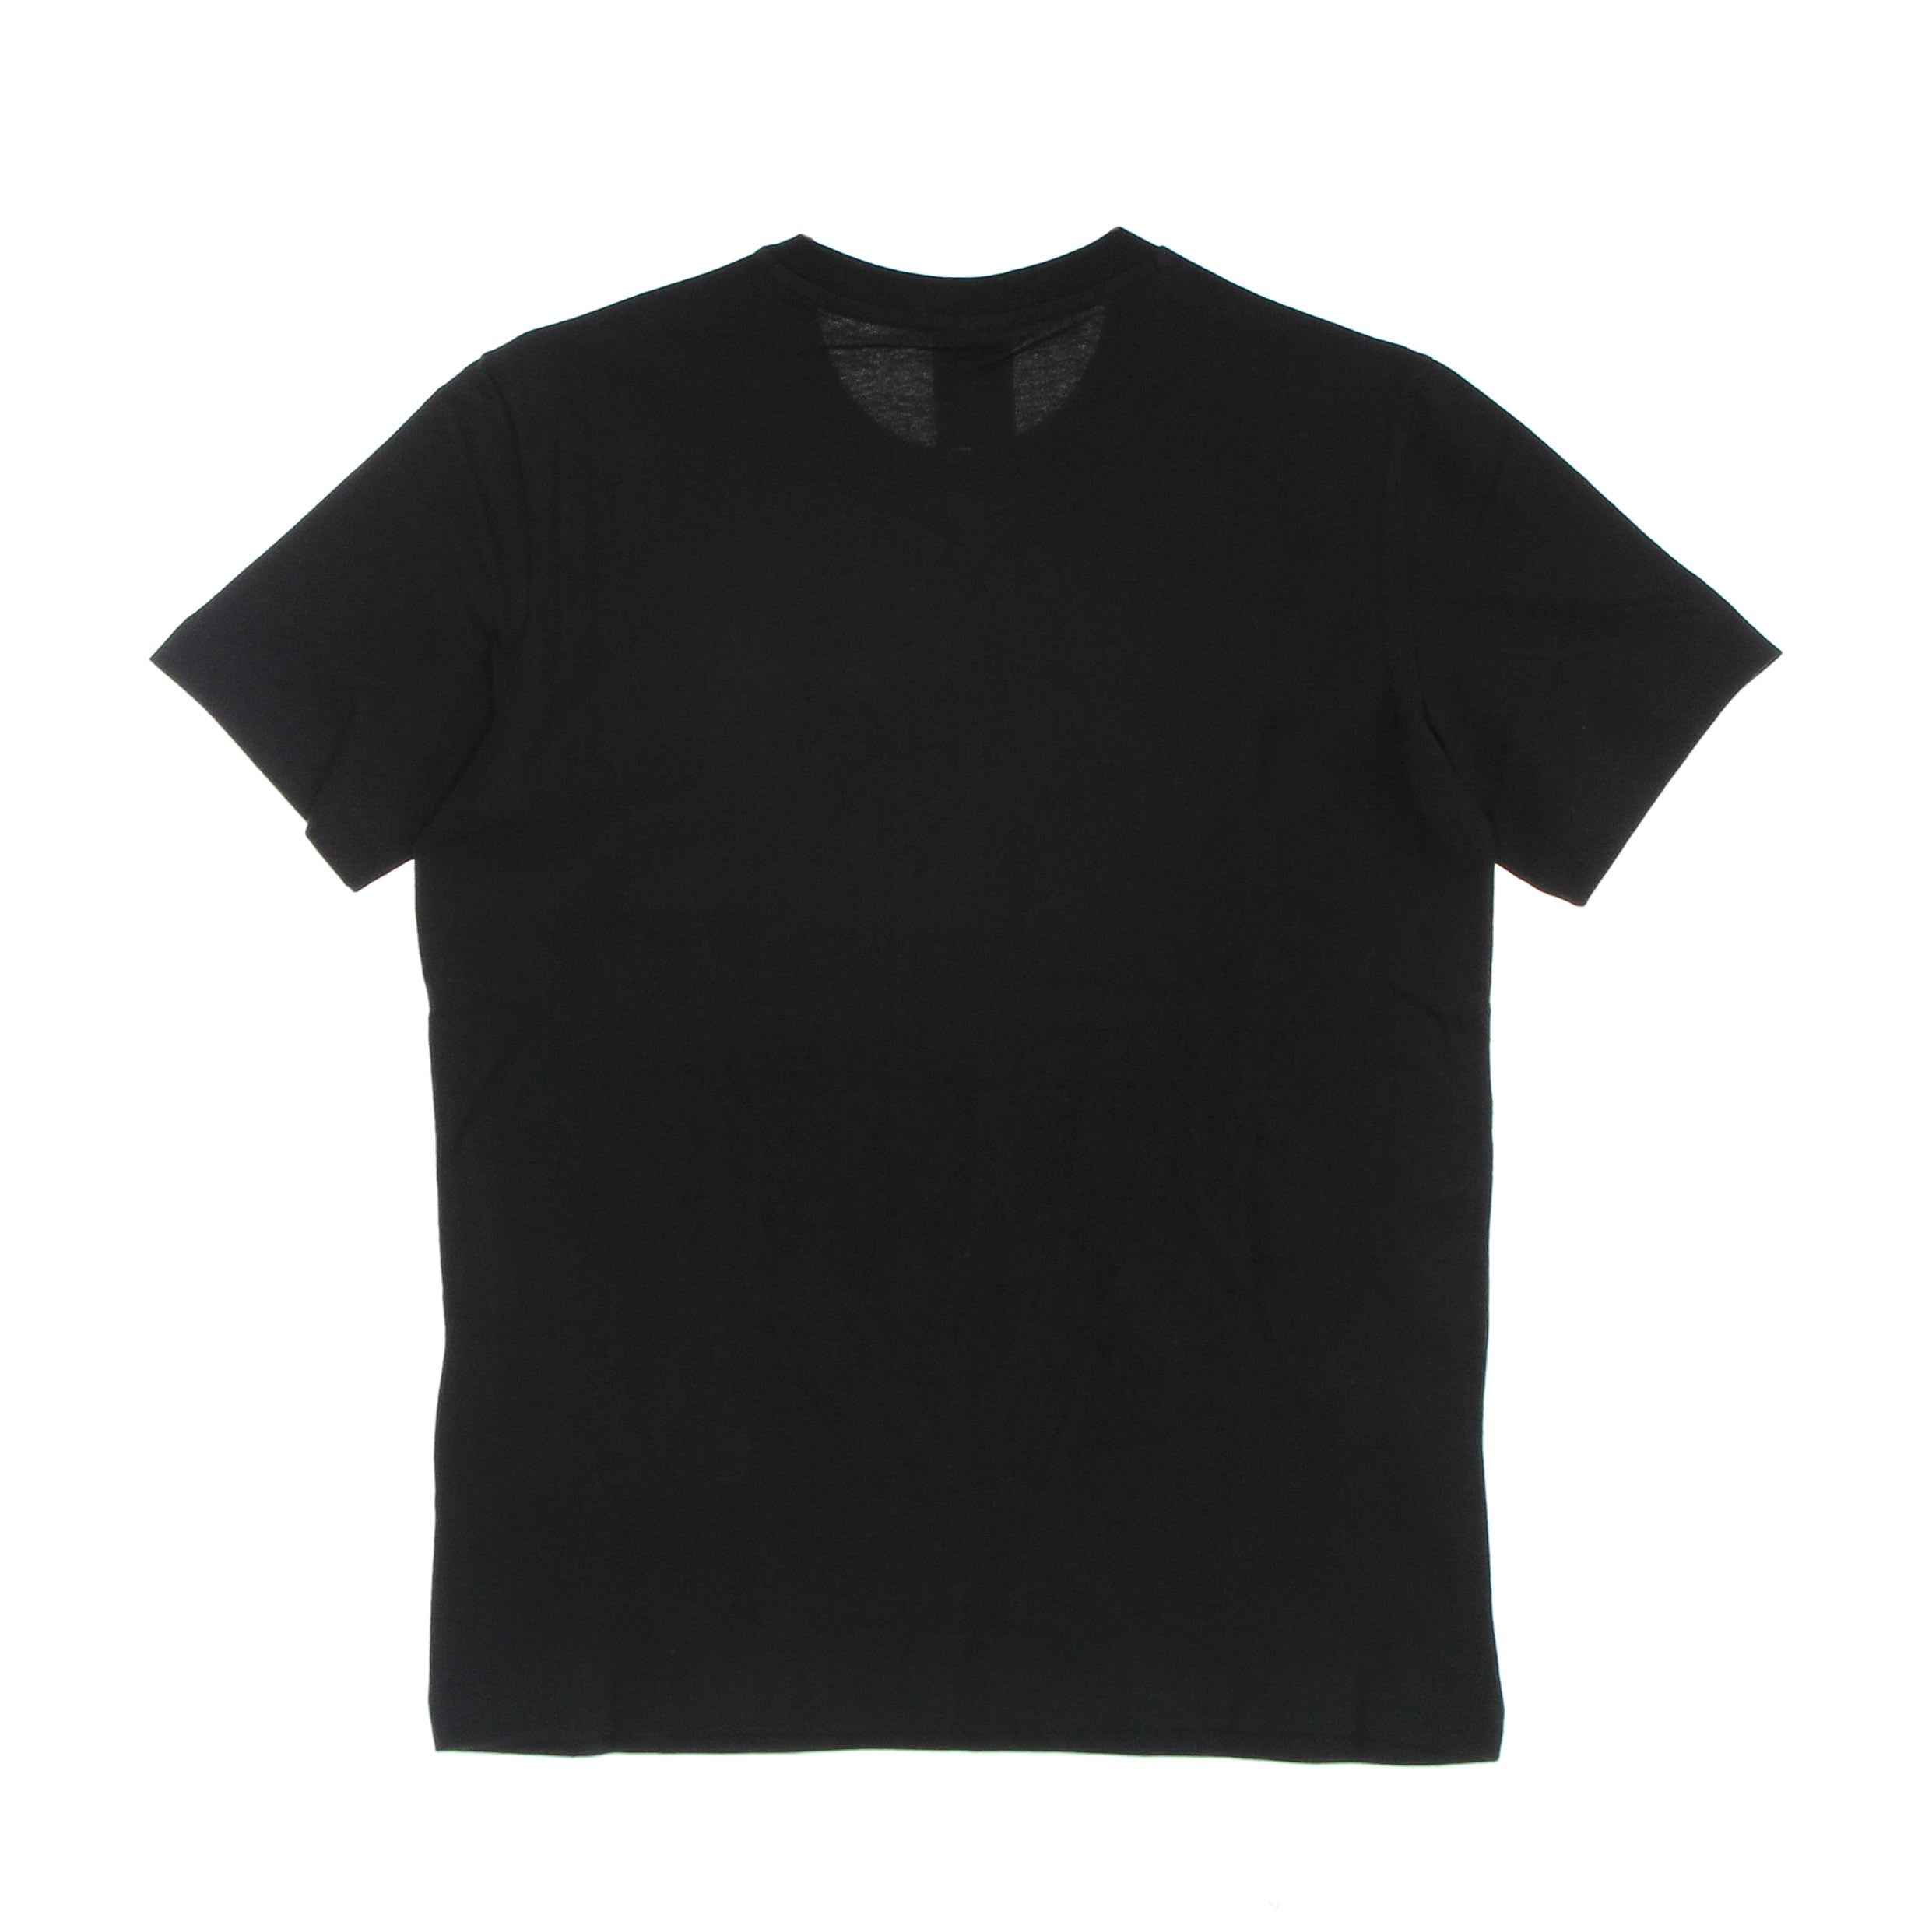 Men's Crewneck Tee X Smiley Black T-Shirt